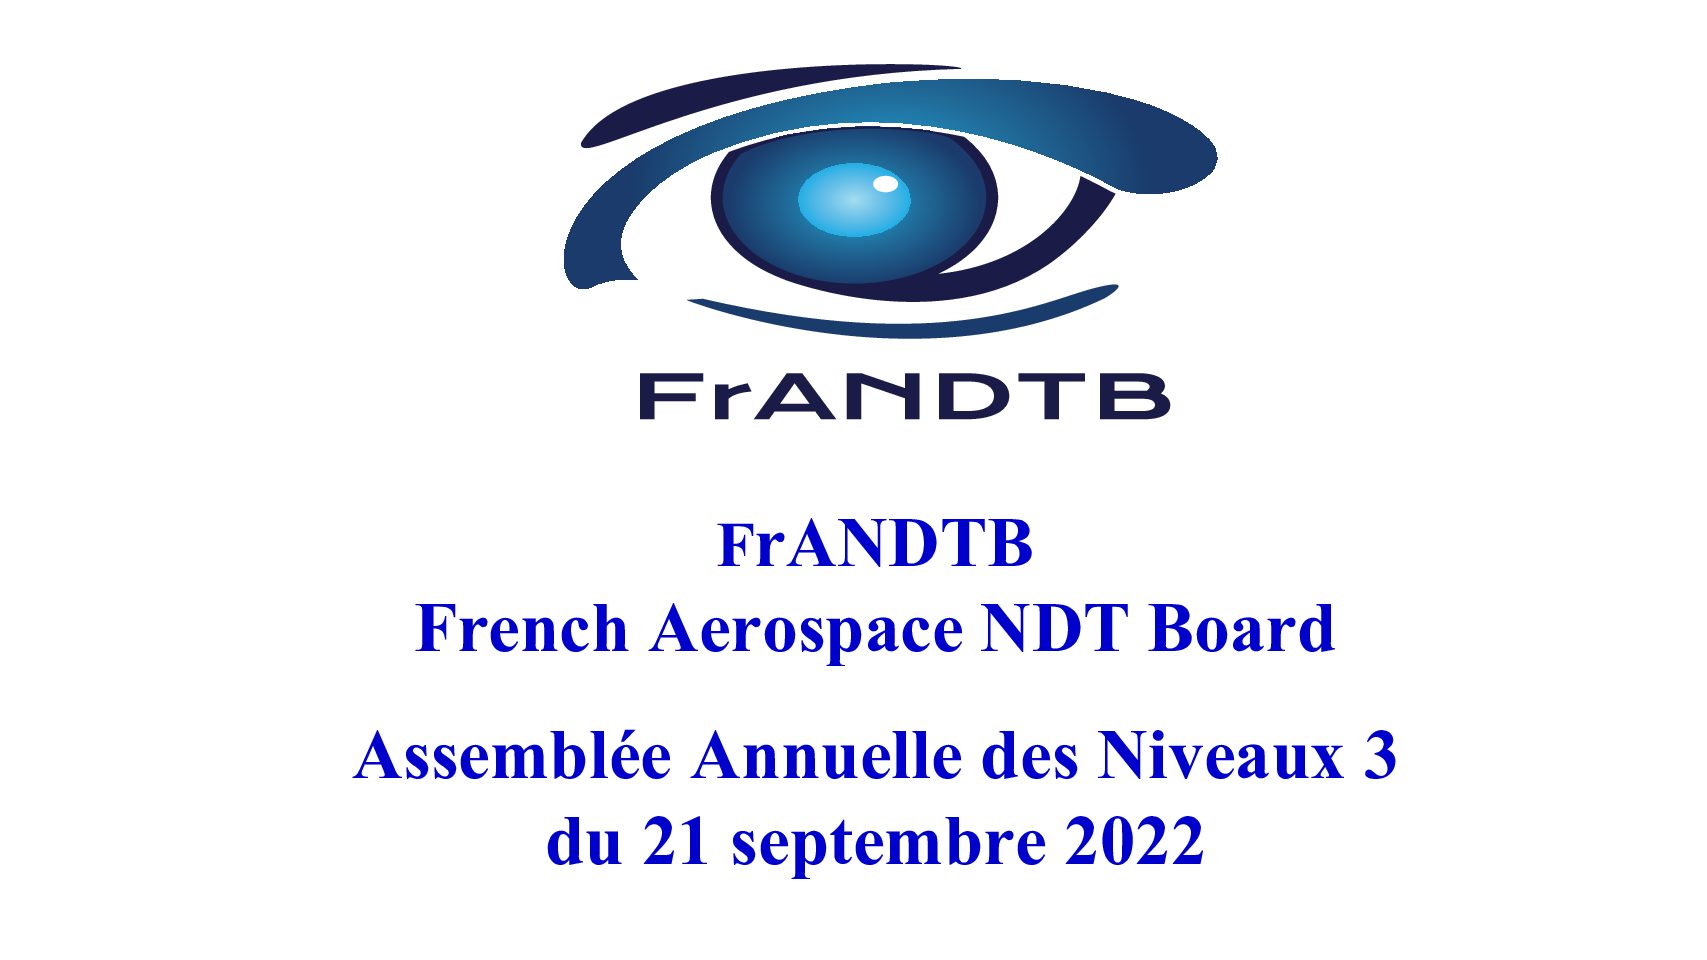 FrANDTB French Aerospace NDT Board